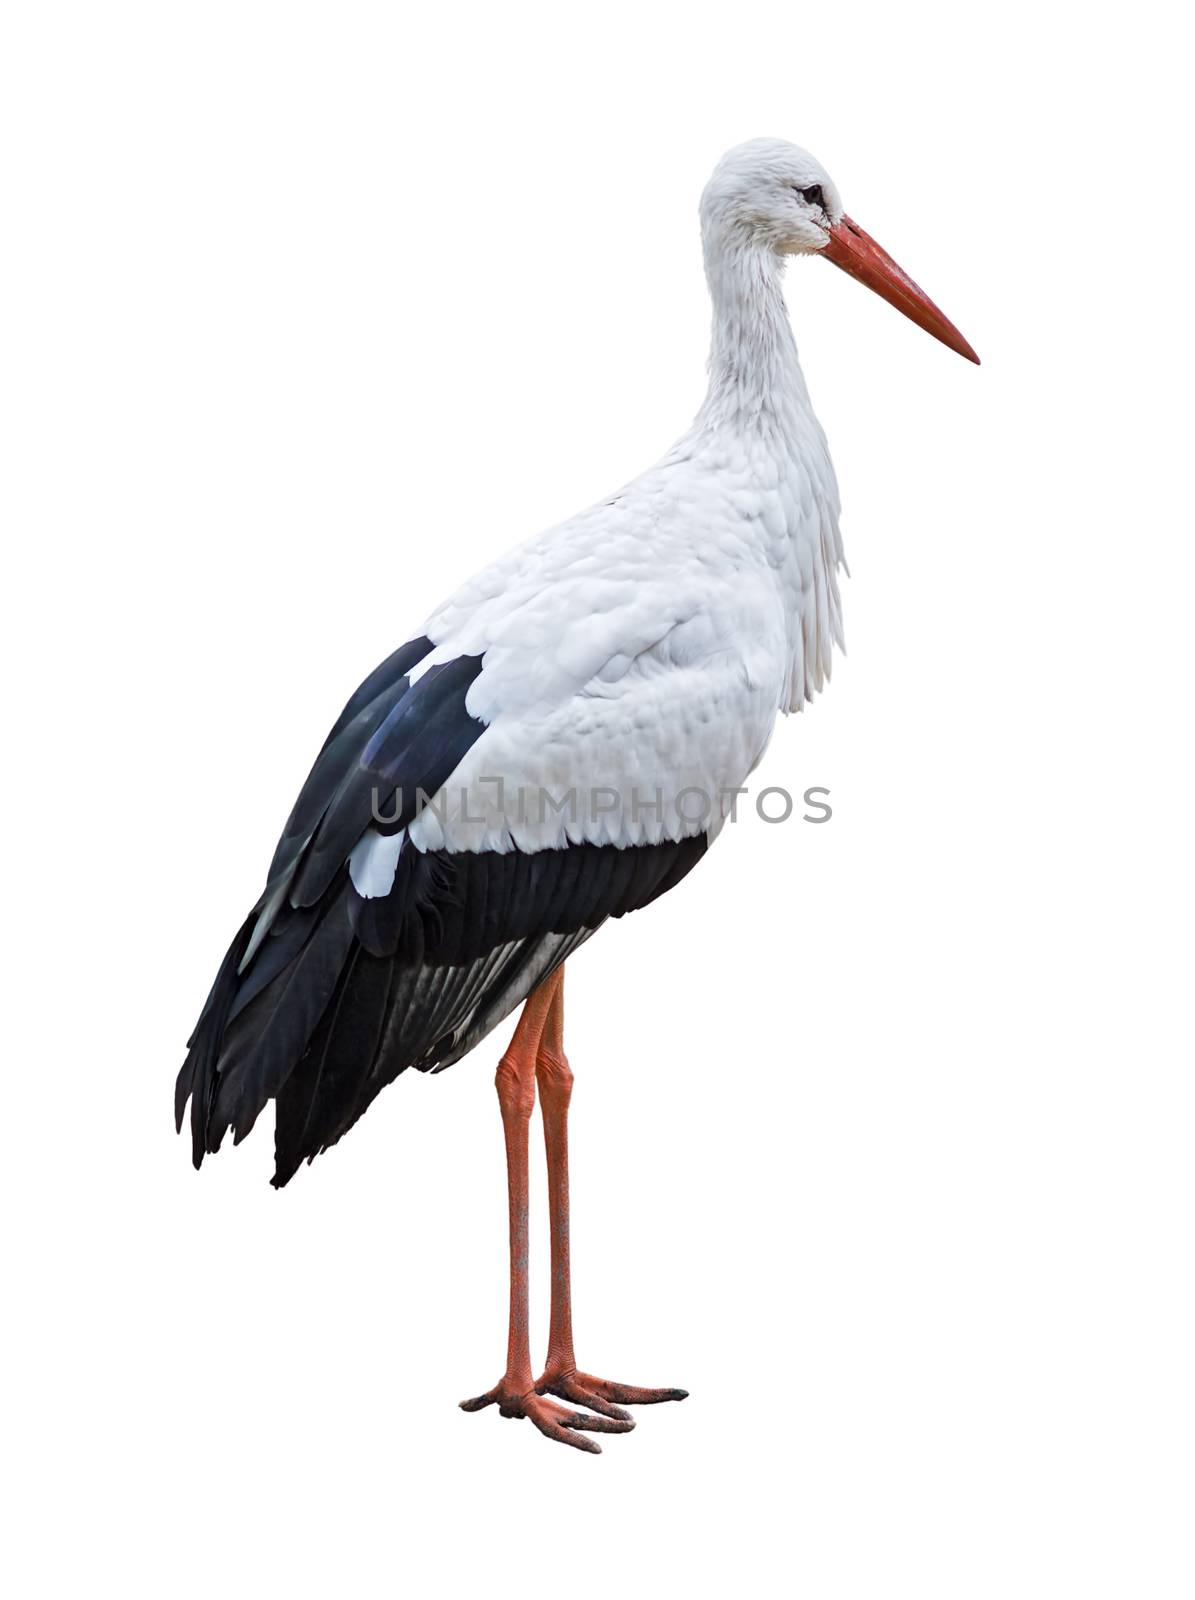 White Stork bird cutout by vkstudio